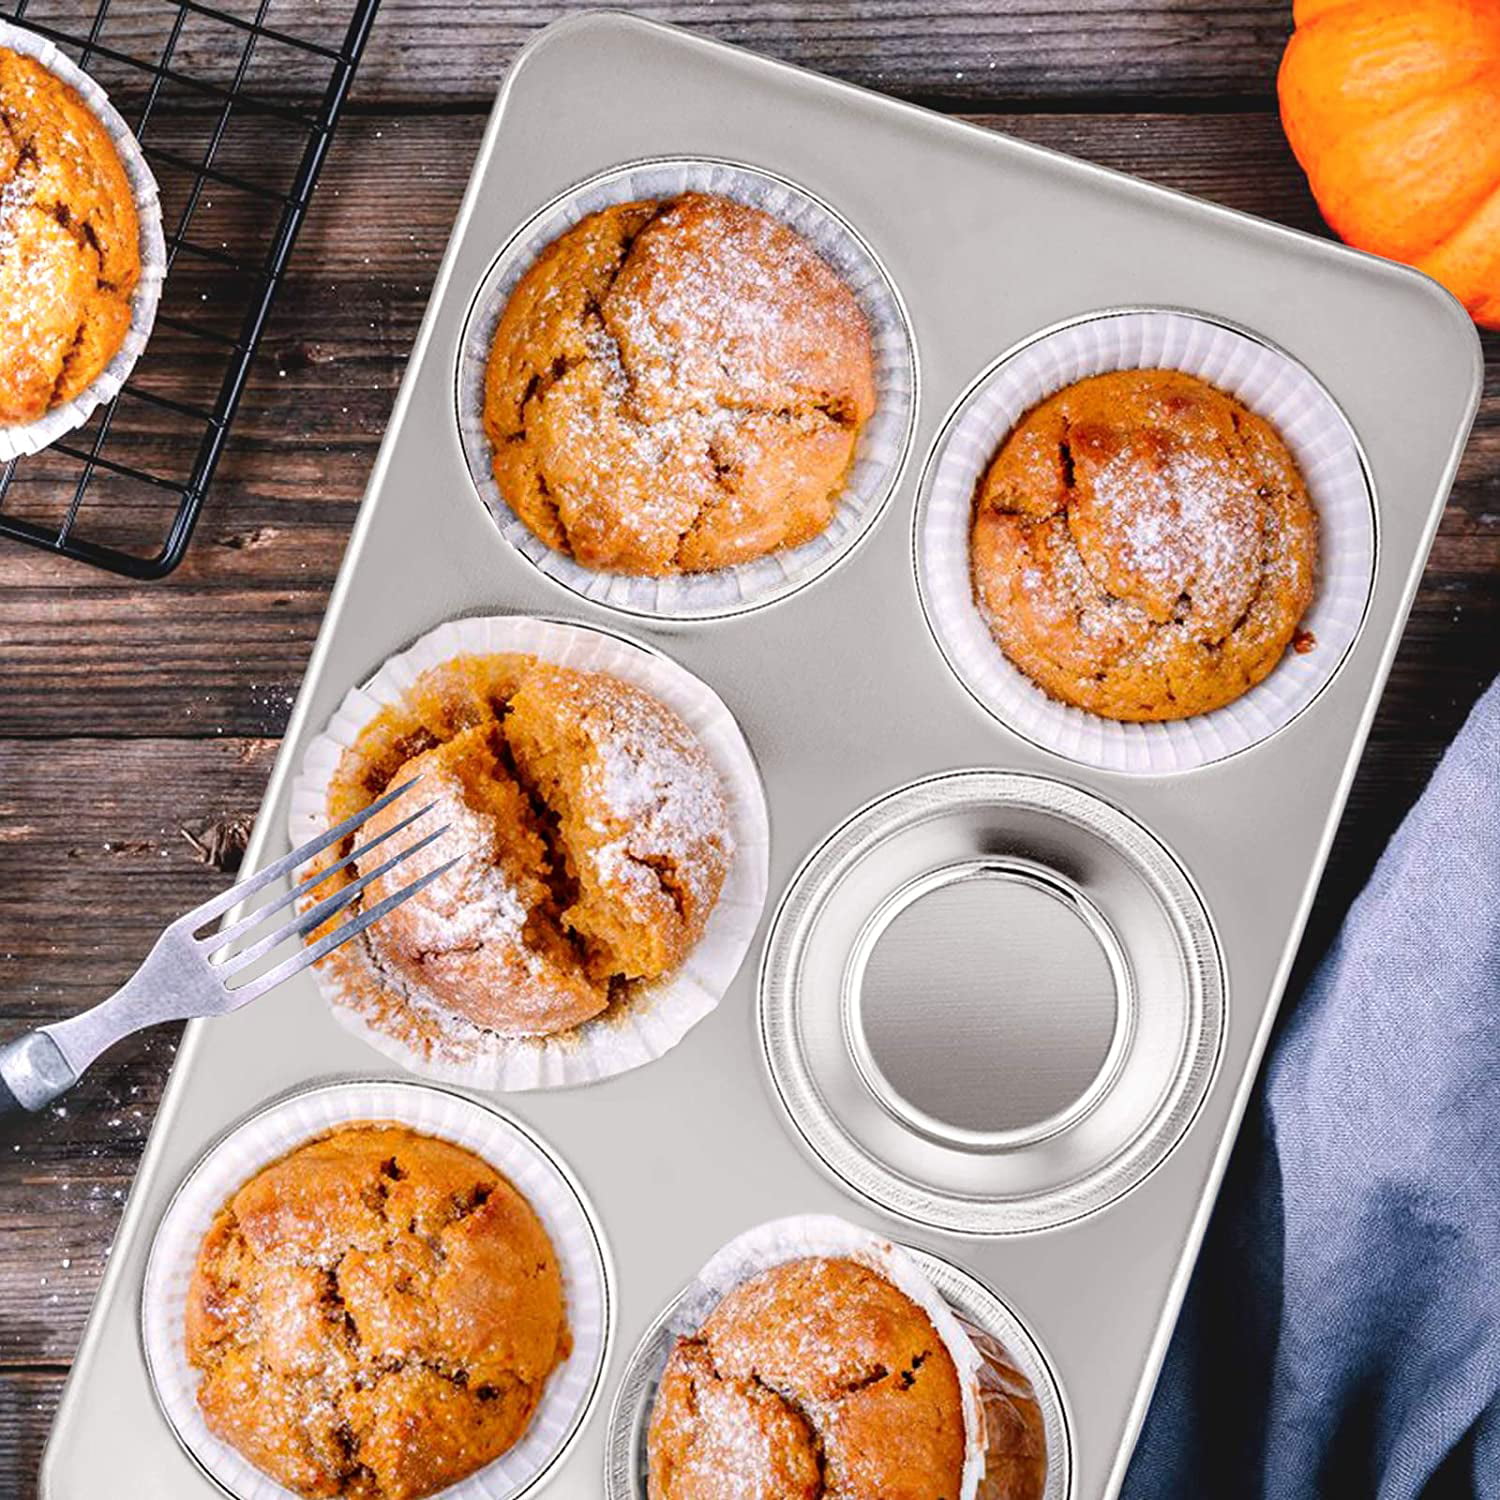 Travelwant 1/2pcs 6-Cup Muffin Pan,Non-Stick Cupcake Bakeware Pan,Premium Non-Stick Bakeware Standard Muffin and Cupcake Pan, Carbon Steel Muffin Tray